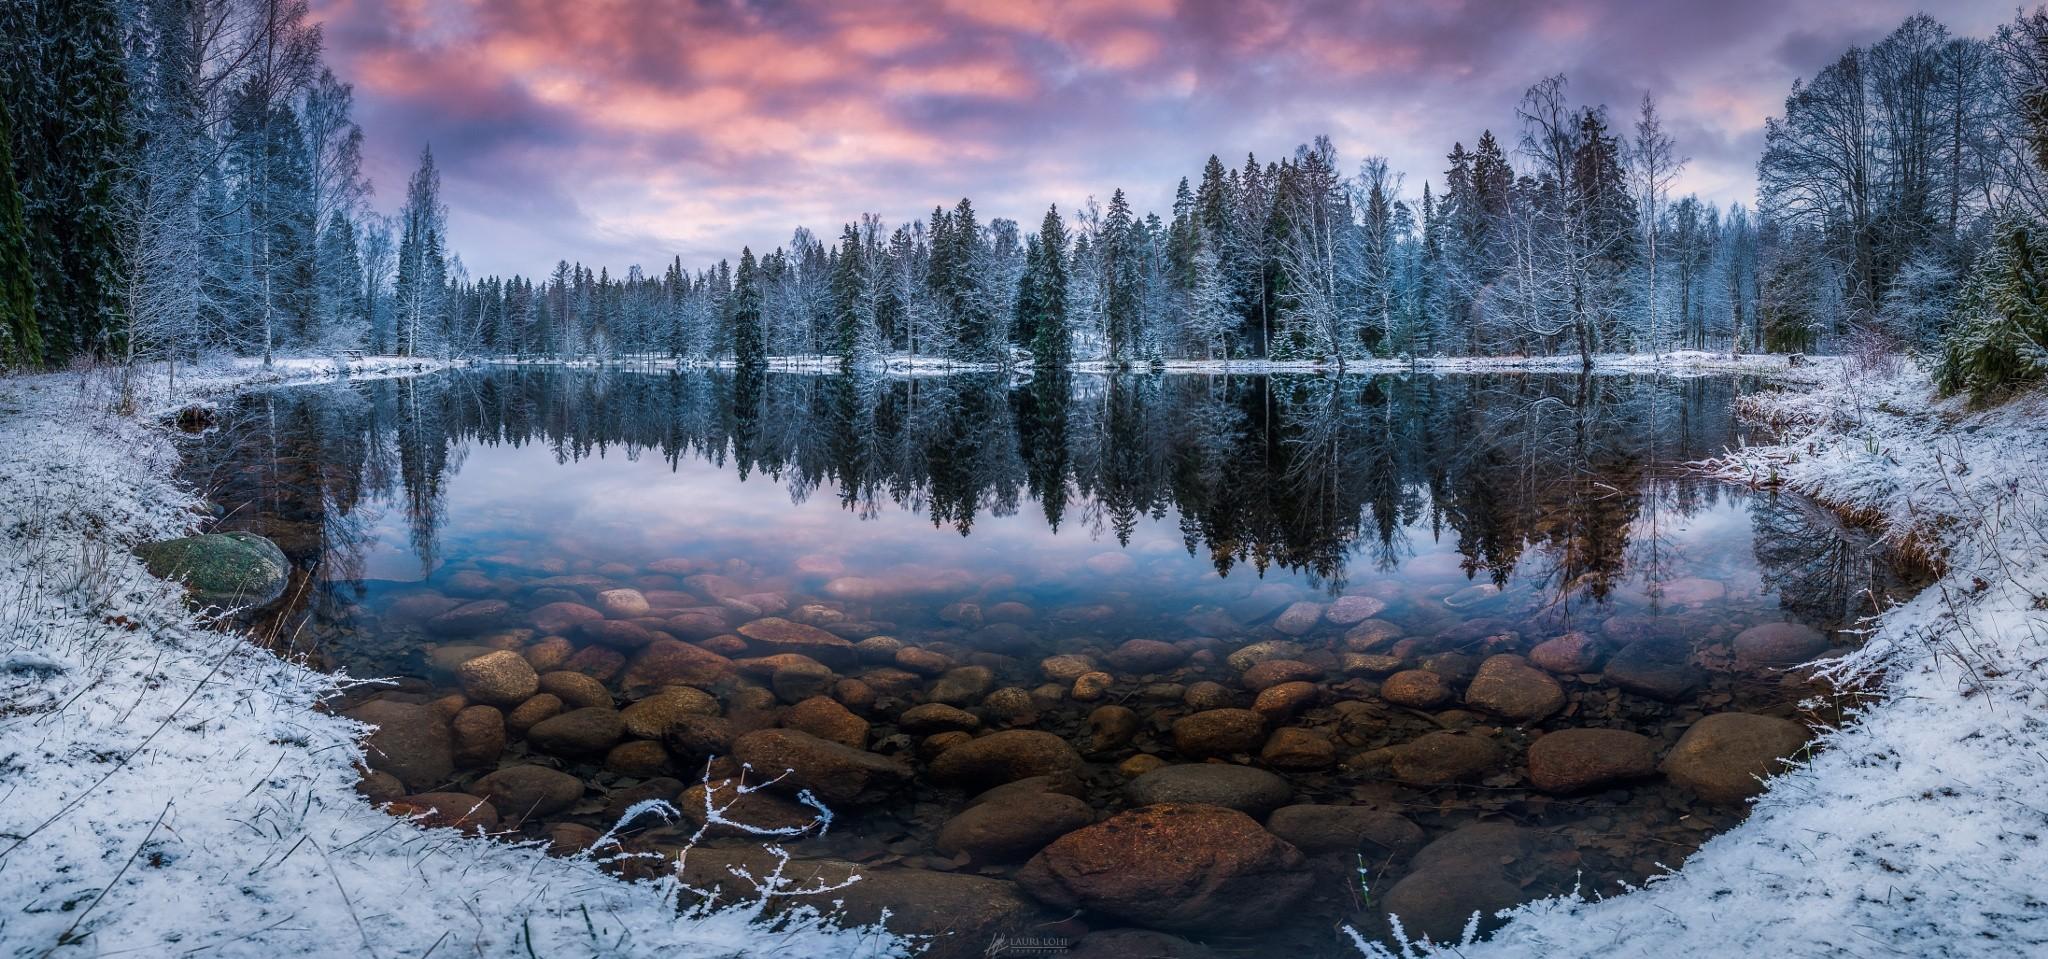 #forest, #landscape, #lake, #morning, #snow, #winter